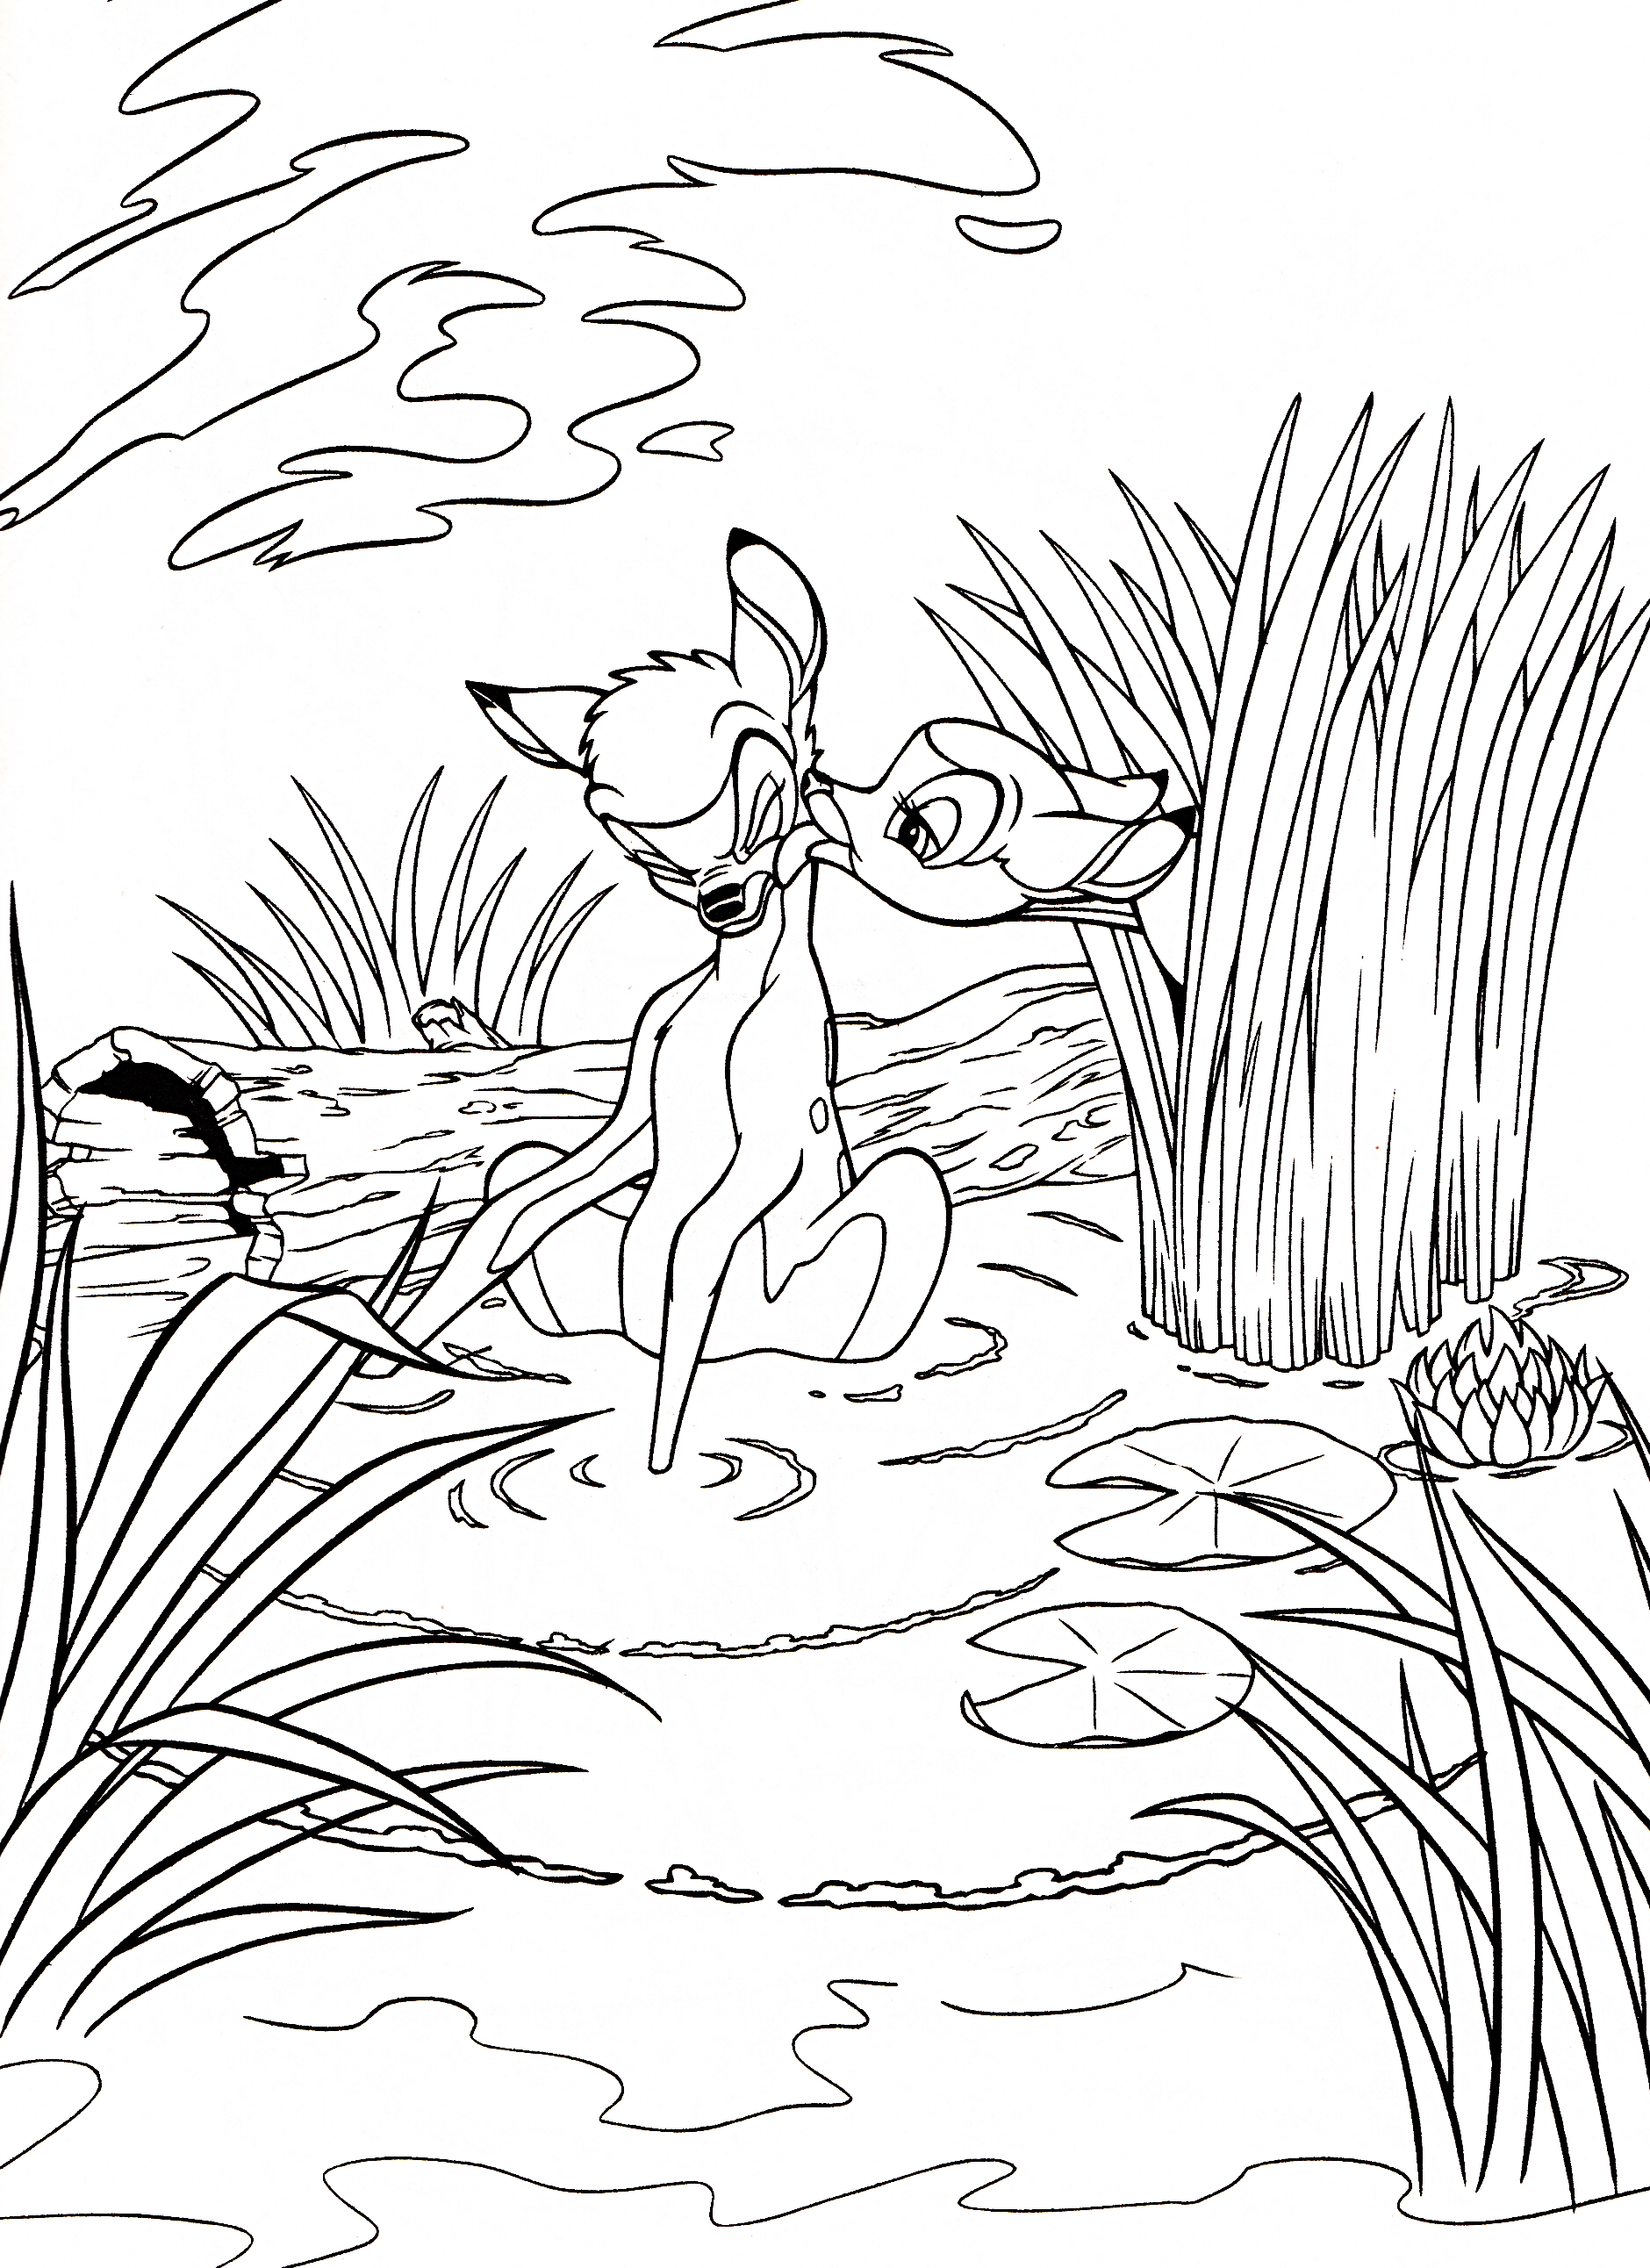 Walt Disney Coloring Pages - Bambi & Faline - Walt Disney Characters